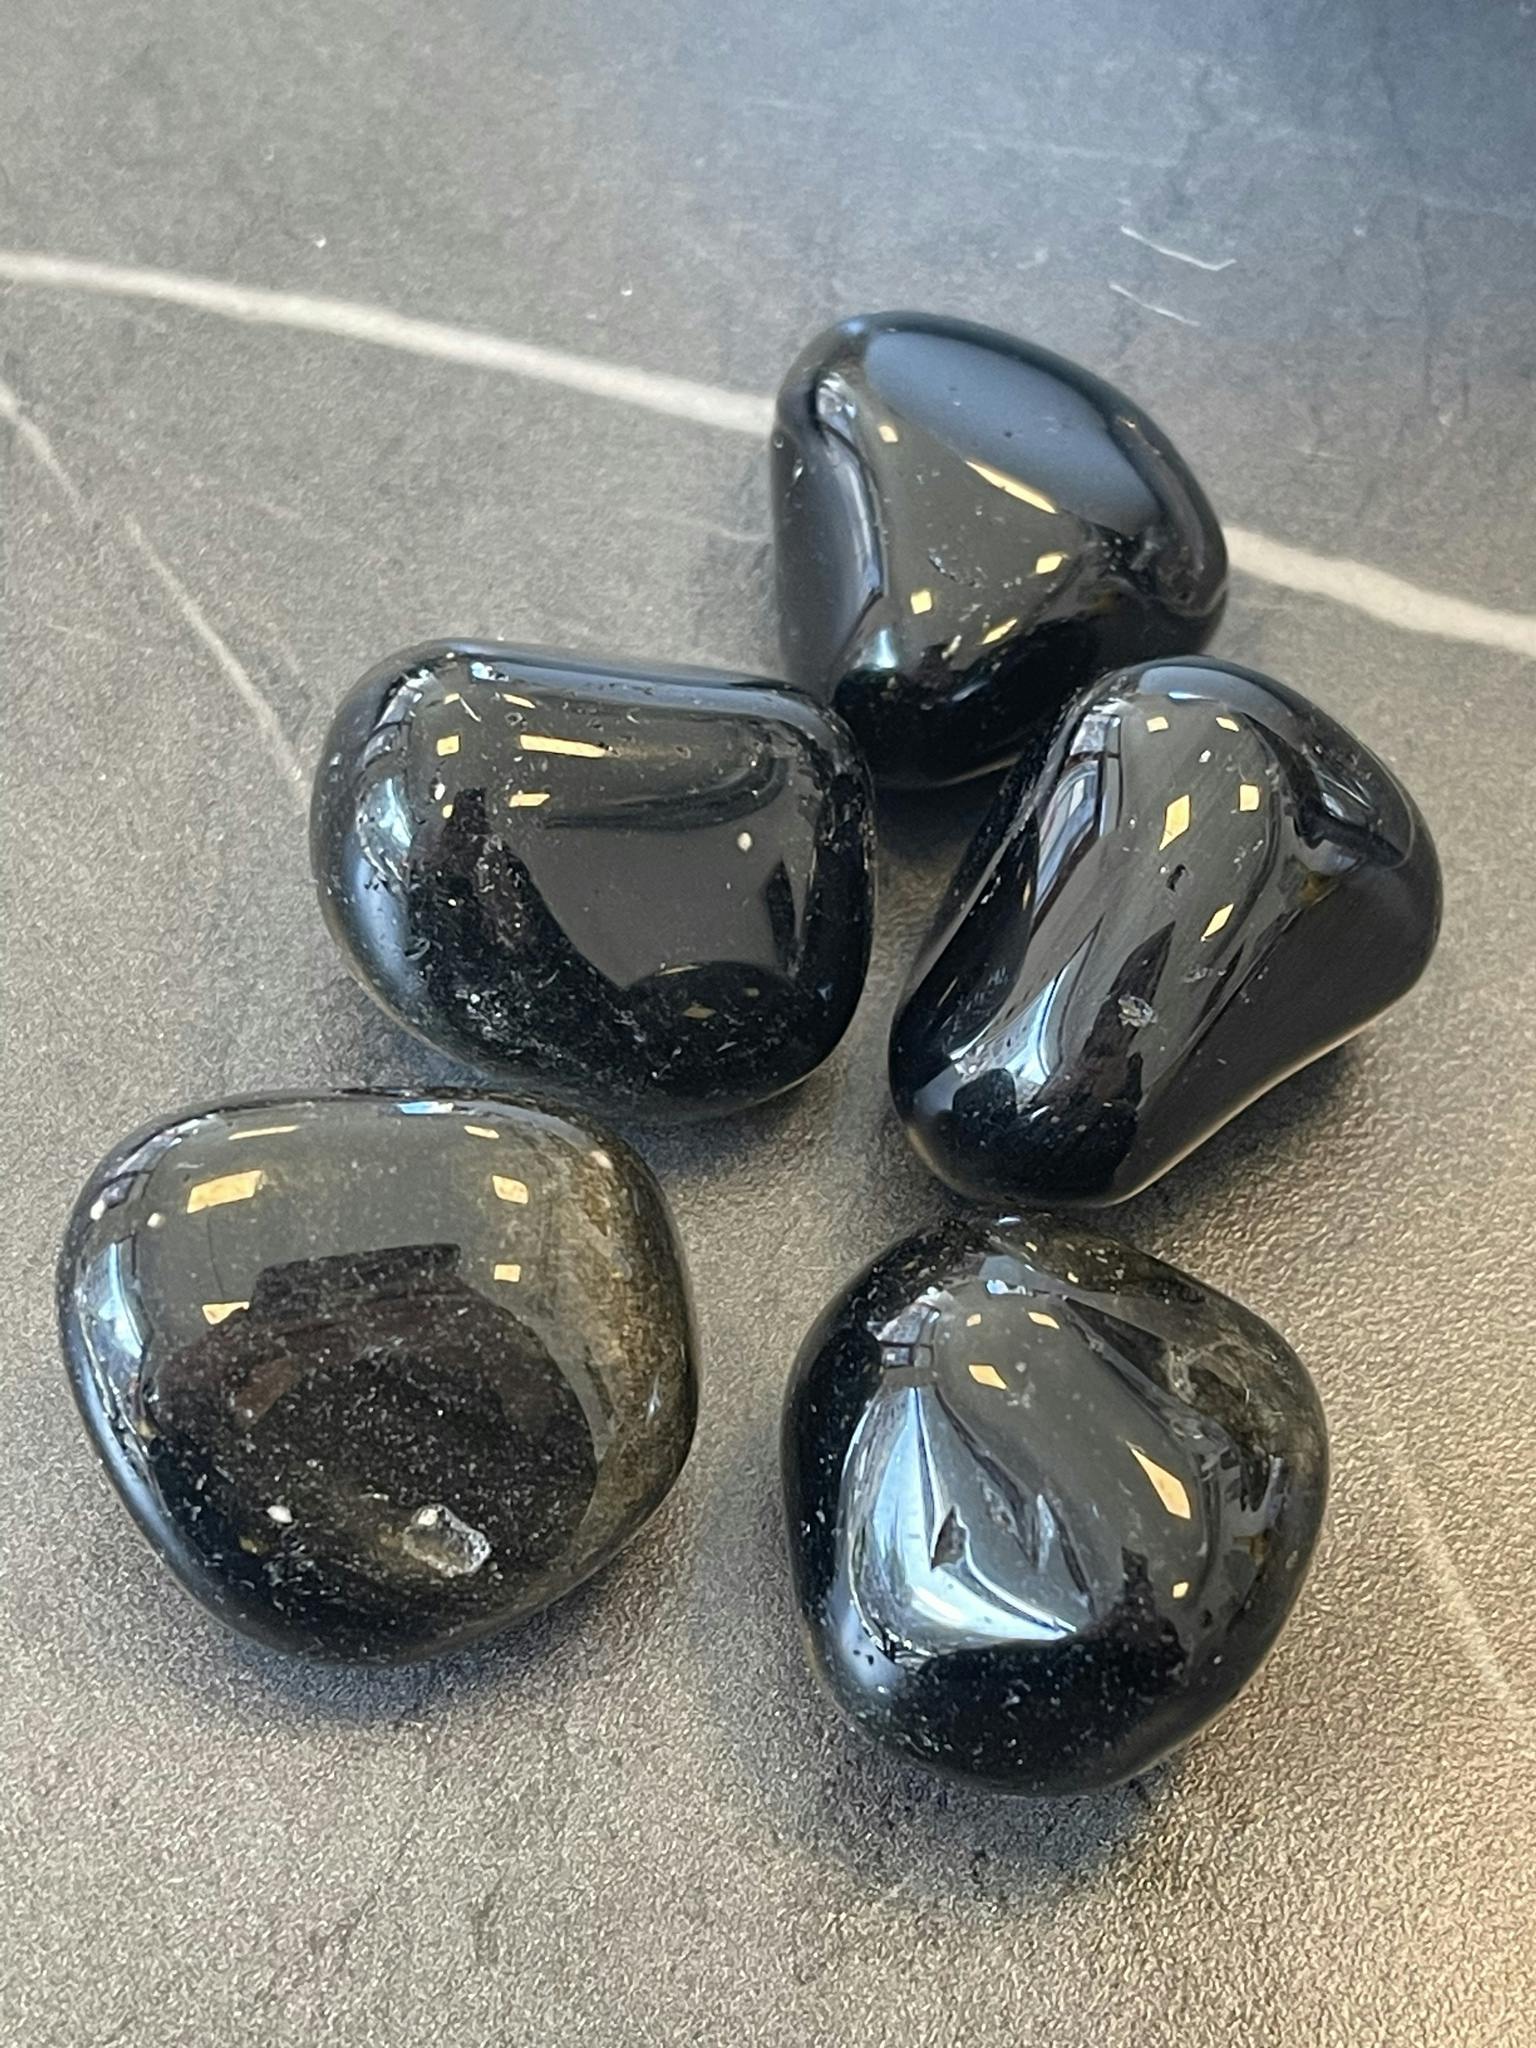 Gold Sheen Obsidian